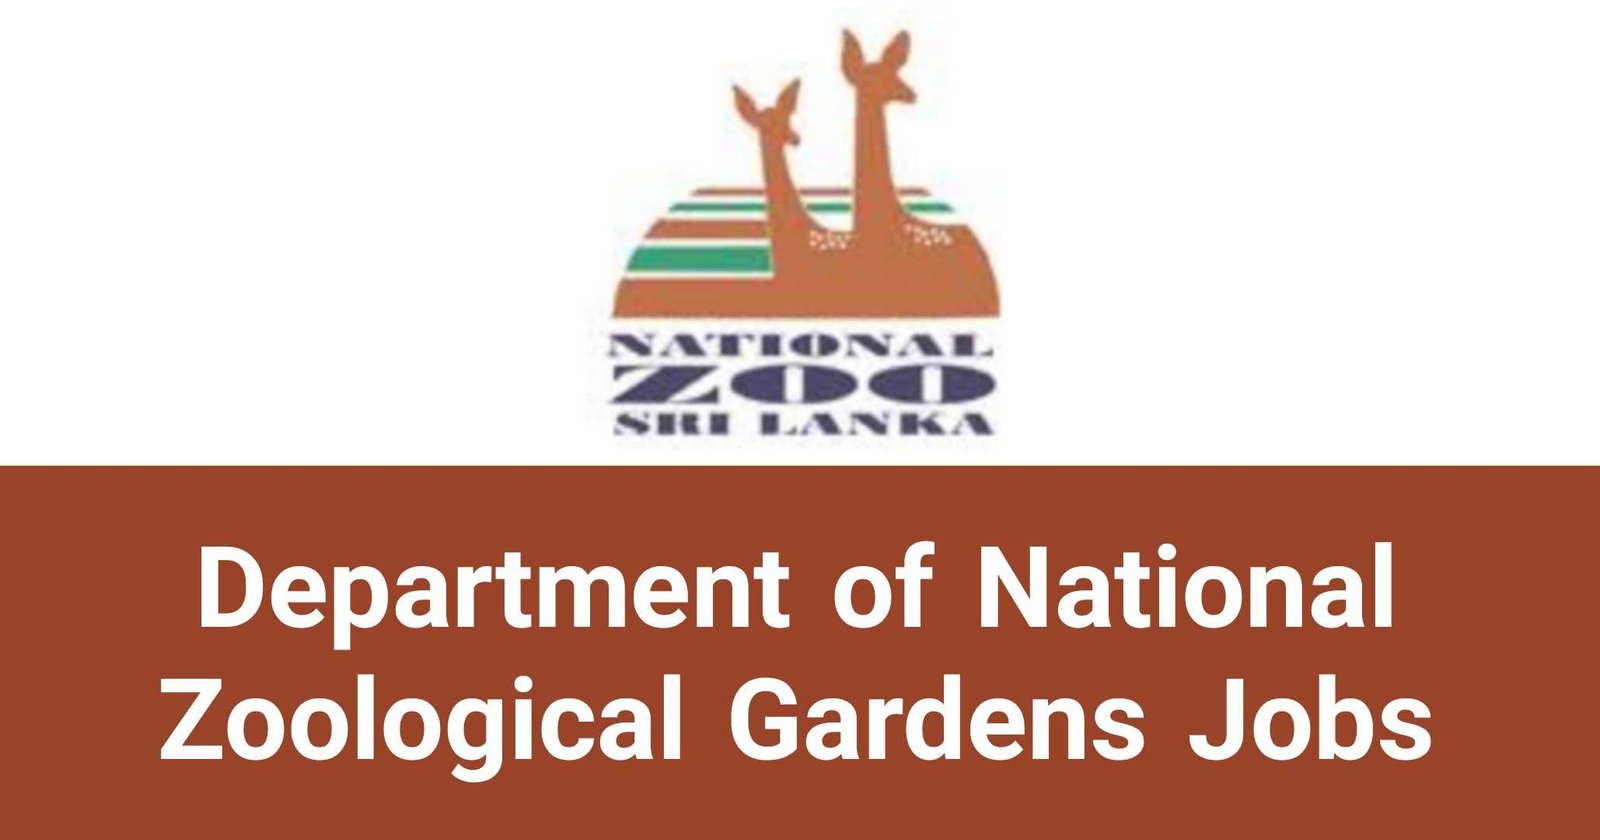 Department of National Zoological Gardens Jobs Vacancies Careers